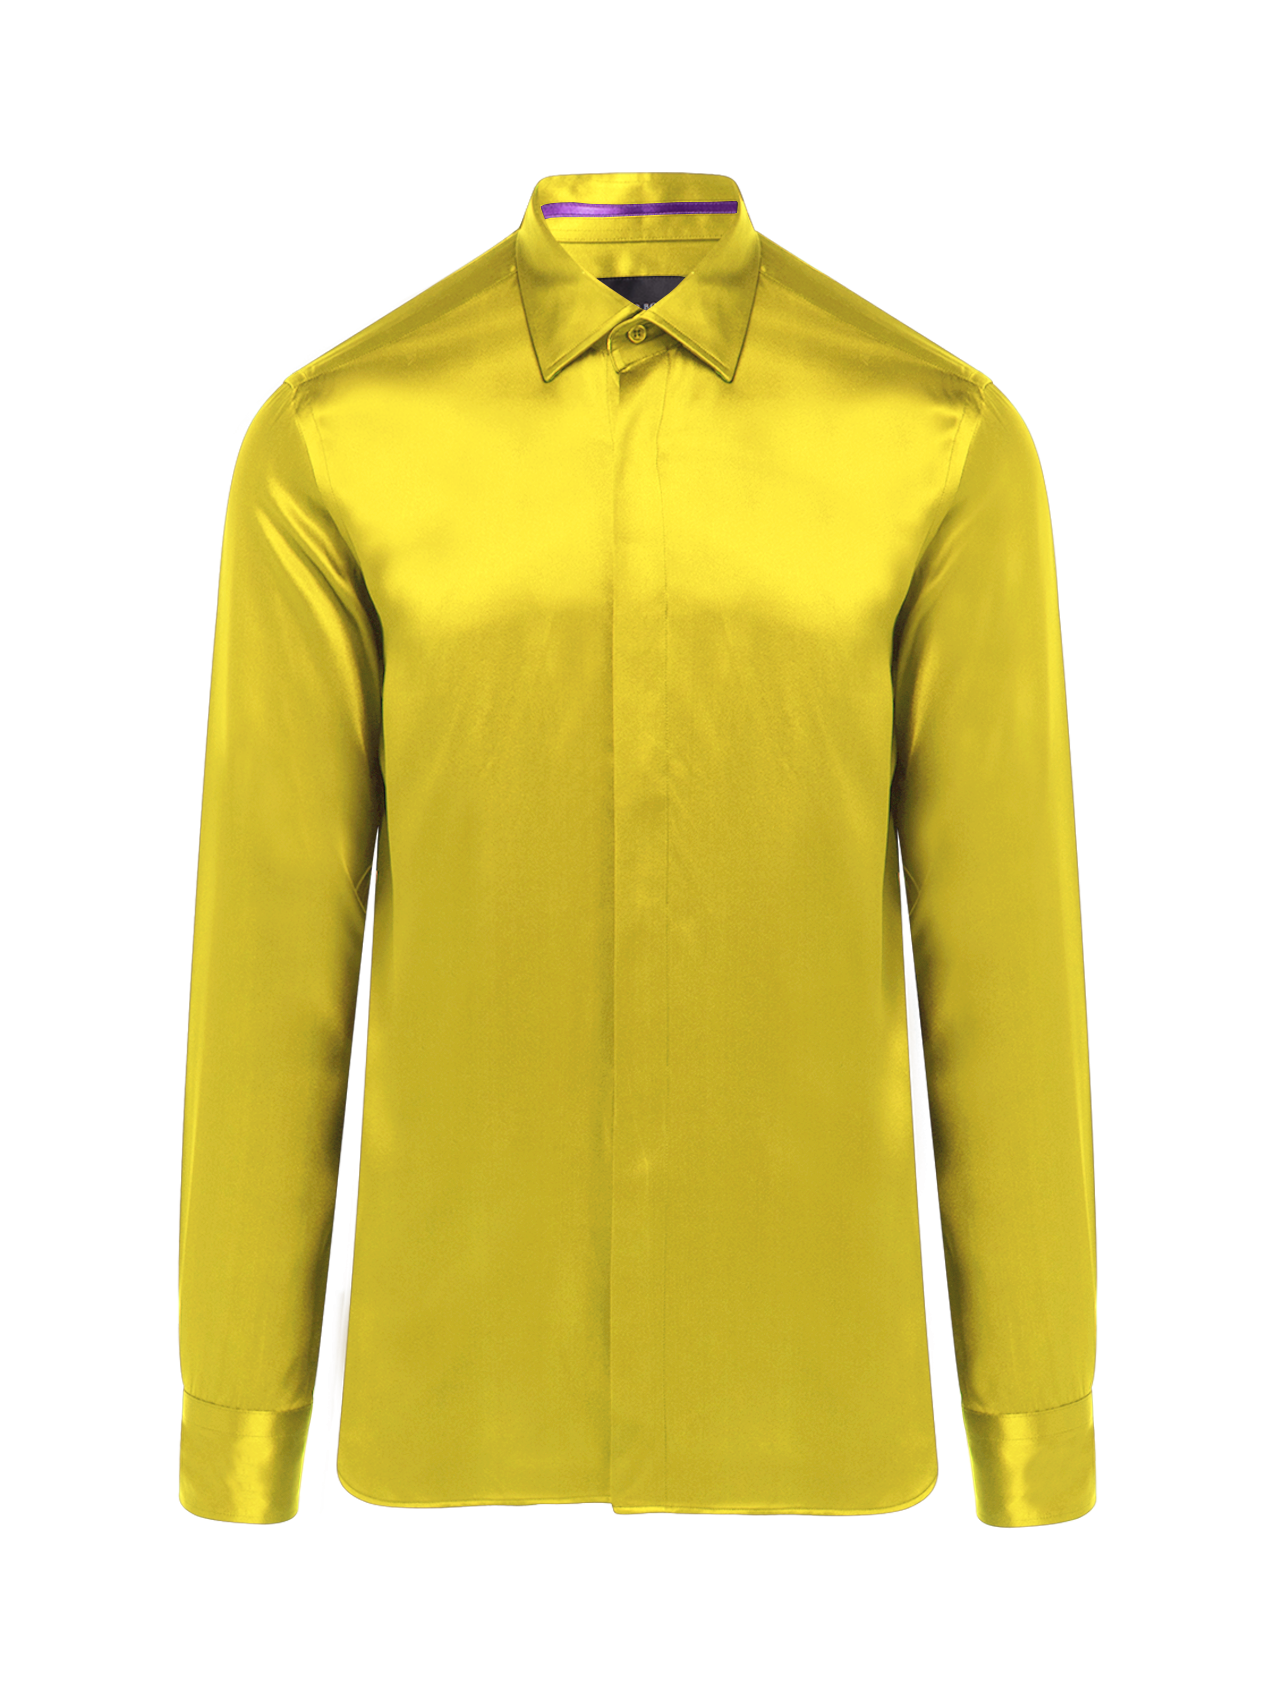 https://images.squarespace-cdn.com/content/v1/6169c88e4d8ab0099aaf6e31/1665241523899-UGL18IAWLXC17ZAV2DRC/Yellow+69+Canary+Yellow+silk+cut+away+shirt+1.png